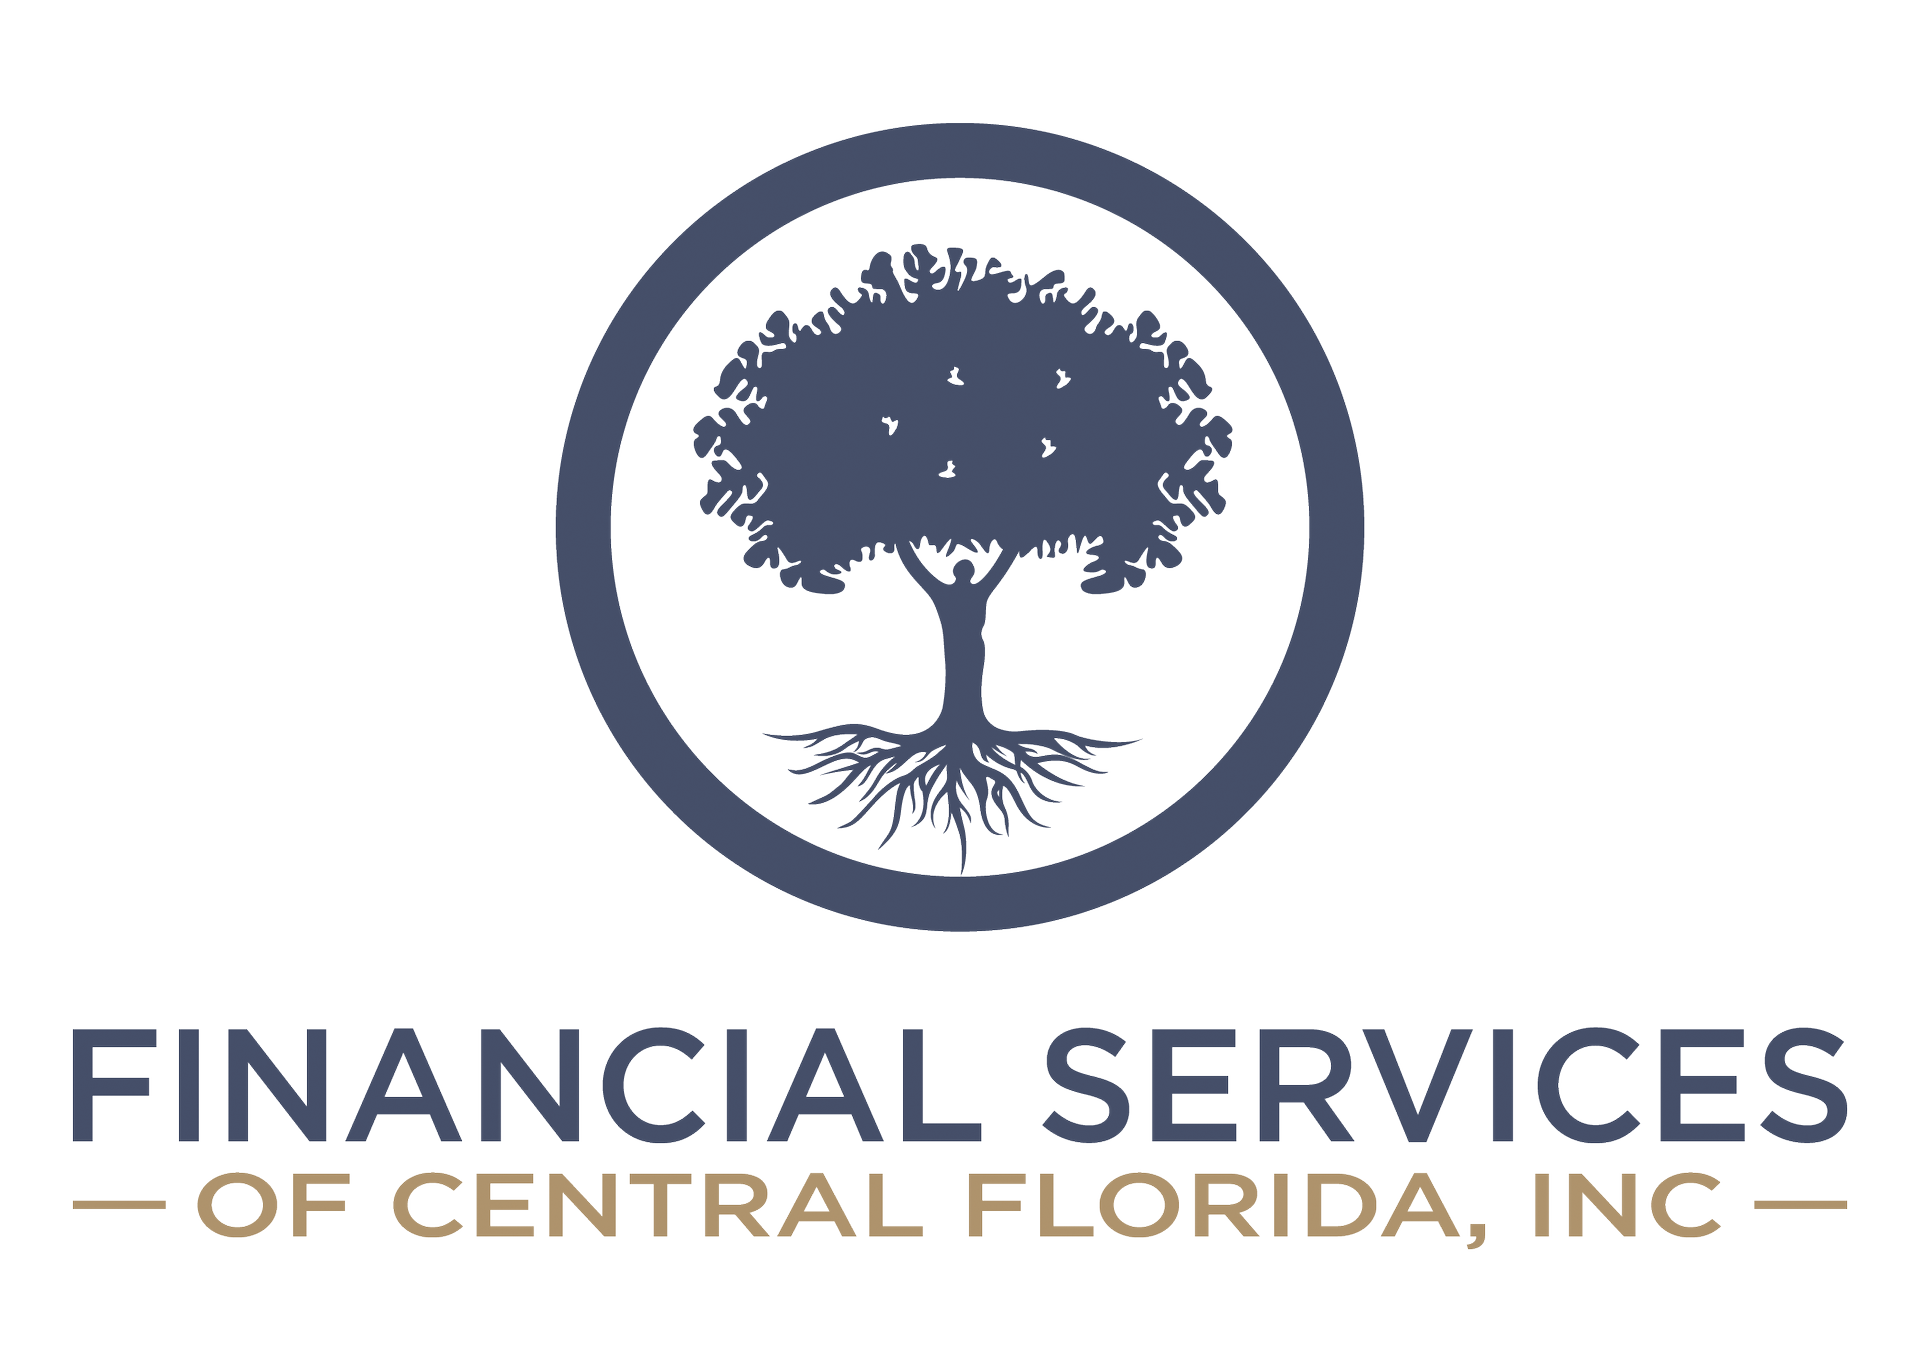 Financial Services of Central Florida, Inc.